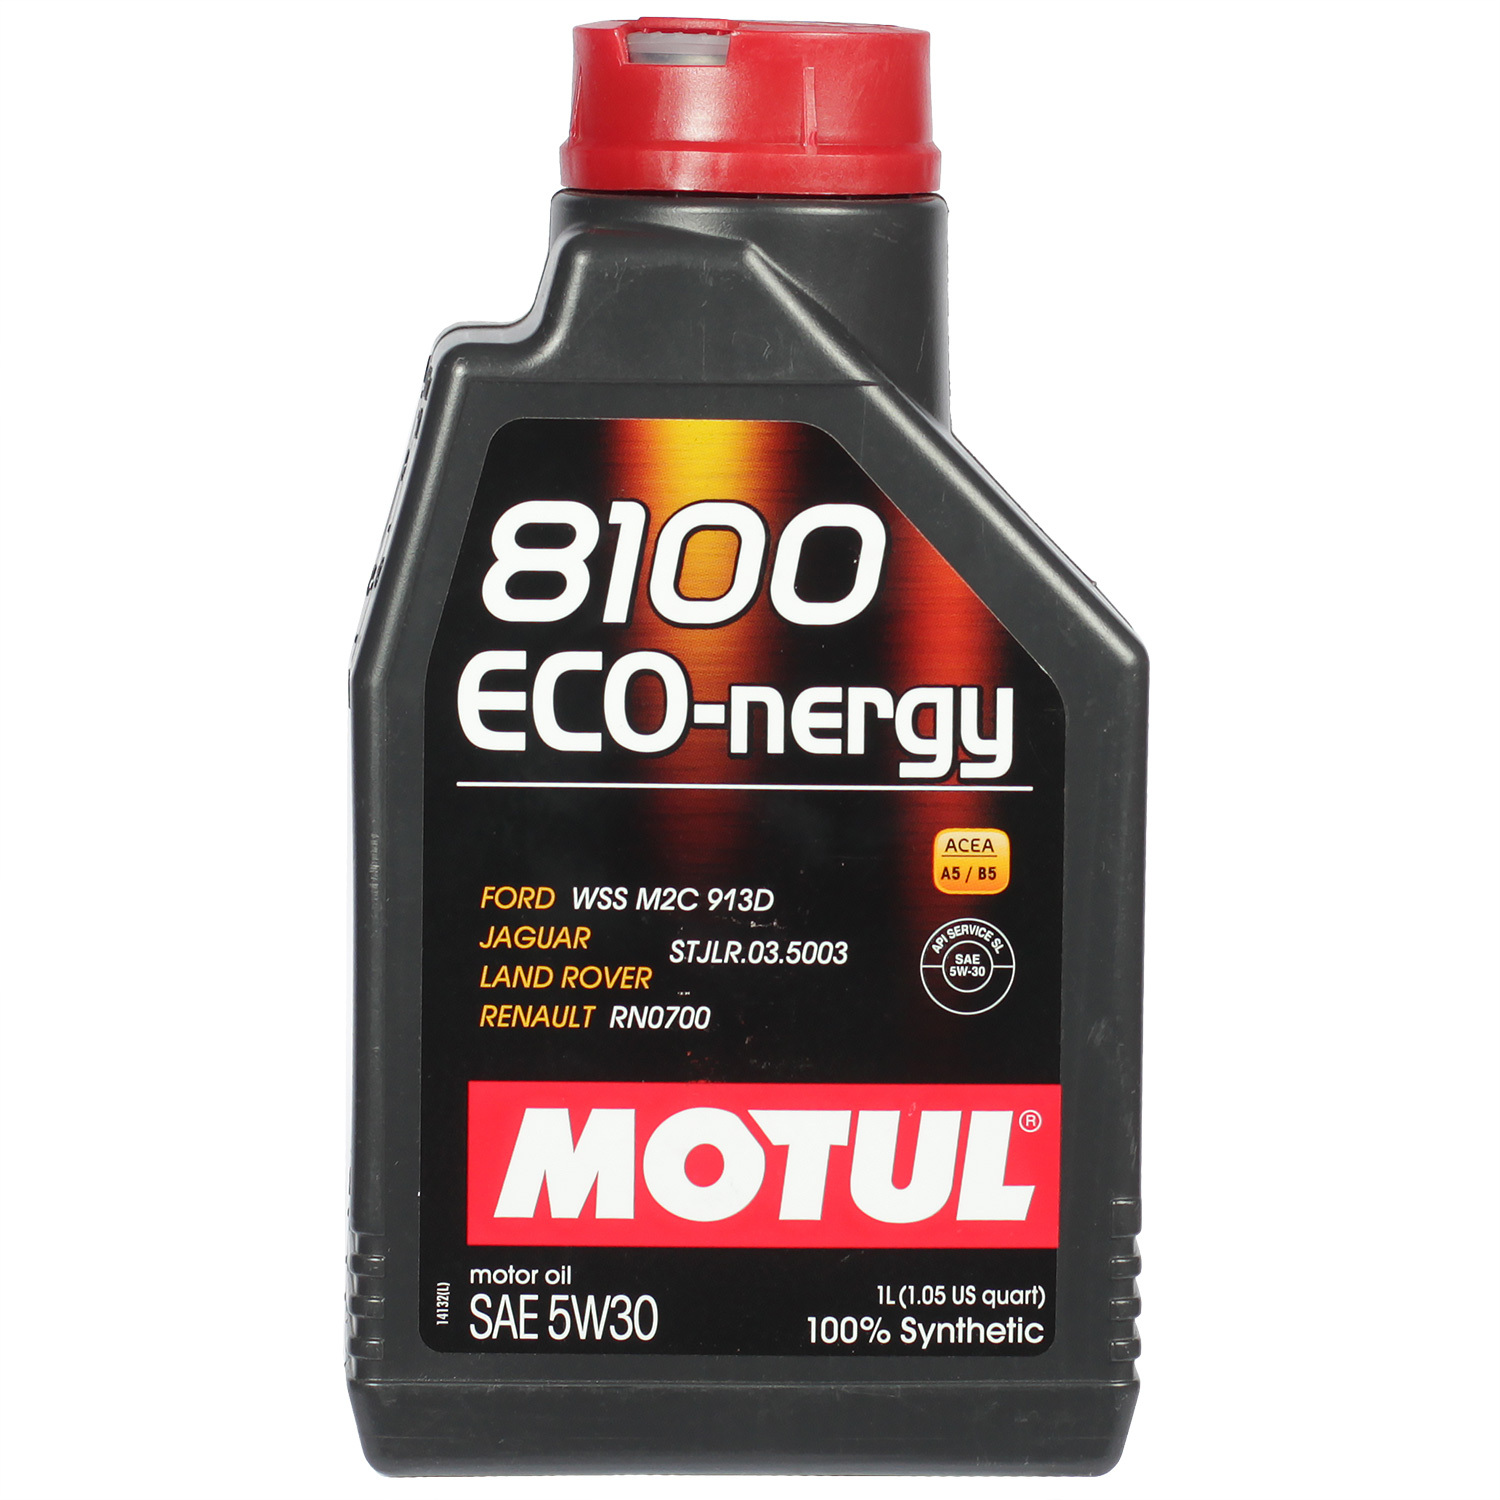 motul моторное масло motul specific 0720 5w 30 1 л Motul Моторное масло Motul 8100 Eco-nergy 5W-30, 1 л